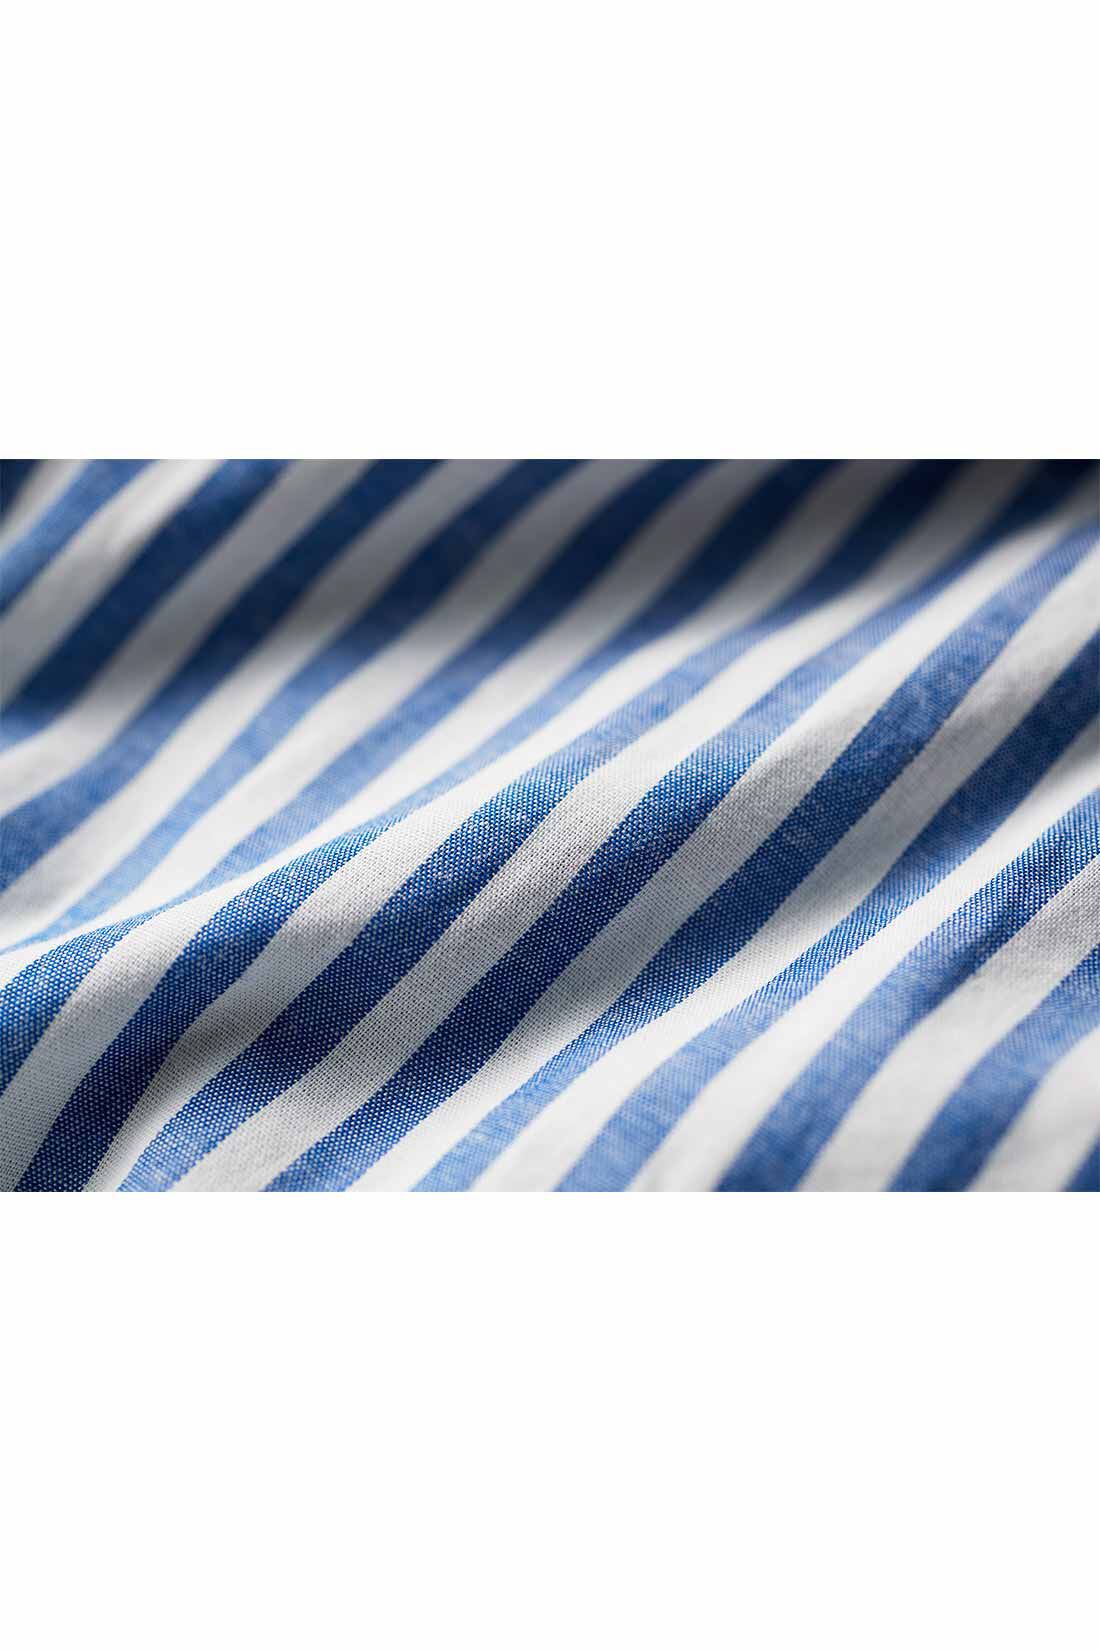 Real Stock|THREE FIFTY STANDARD ストライプのギャザースカート〈ブルー〉|ムラ感のある糸を使用しながらもフラットに織り上げた播州織の先染め生地。